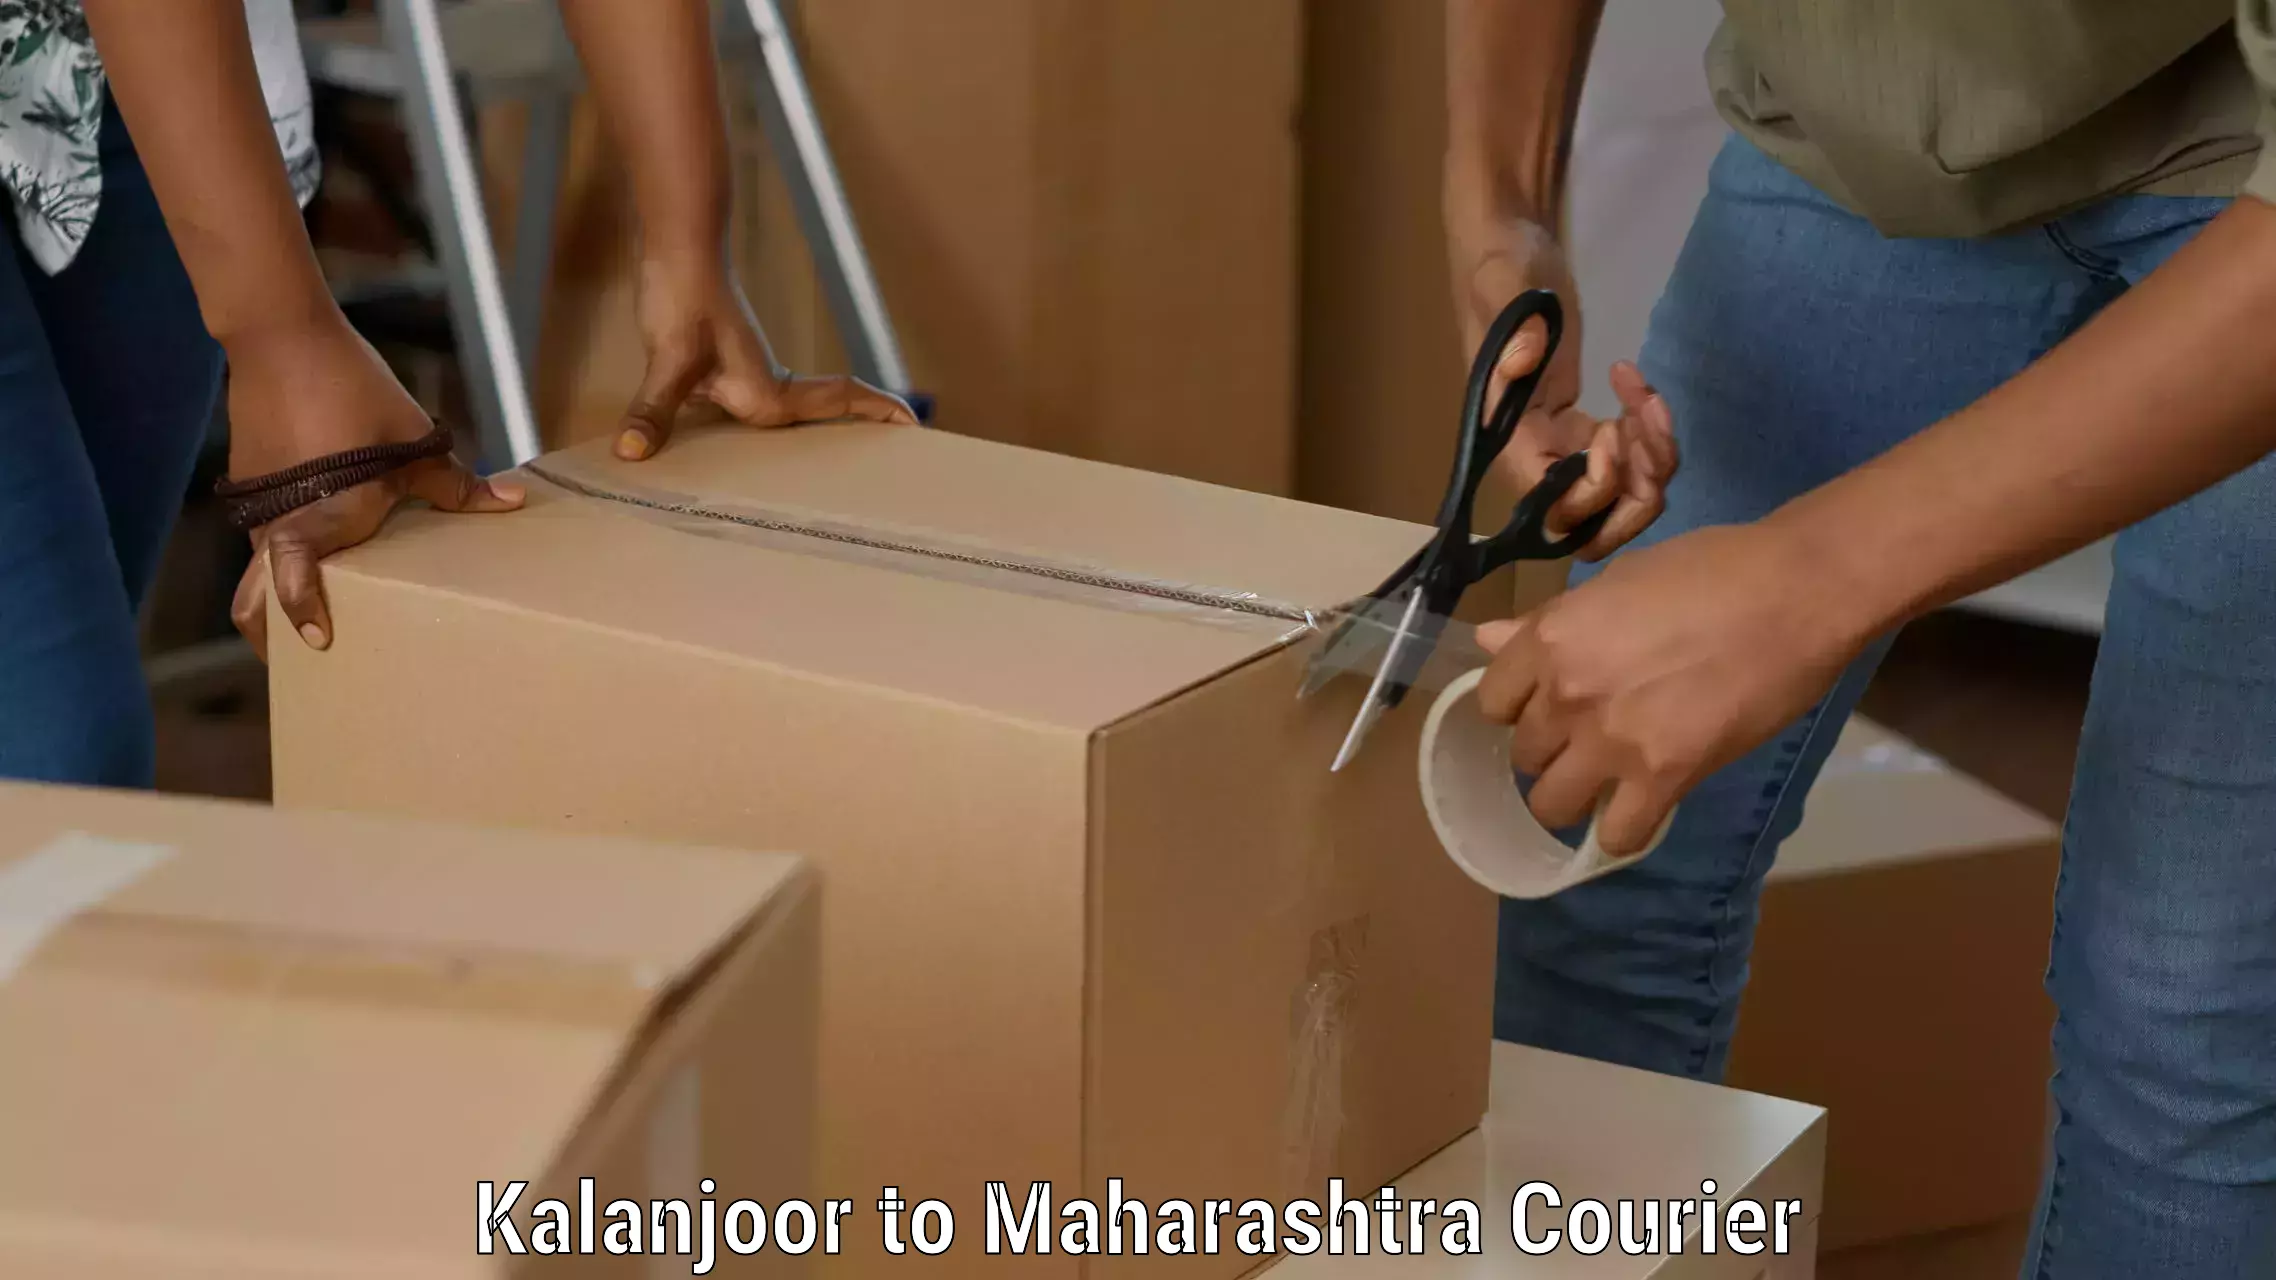 Urgent courier needs Kalanjoor to Panvel